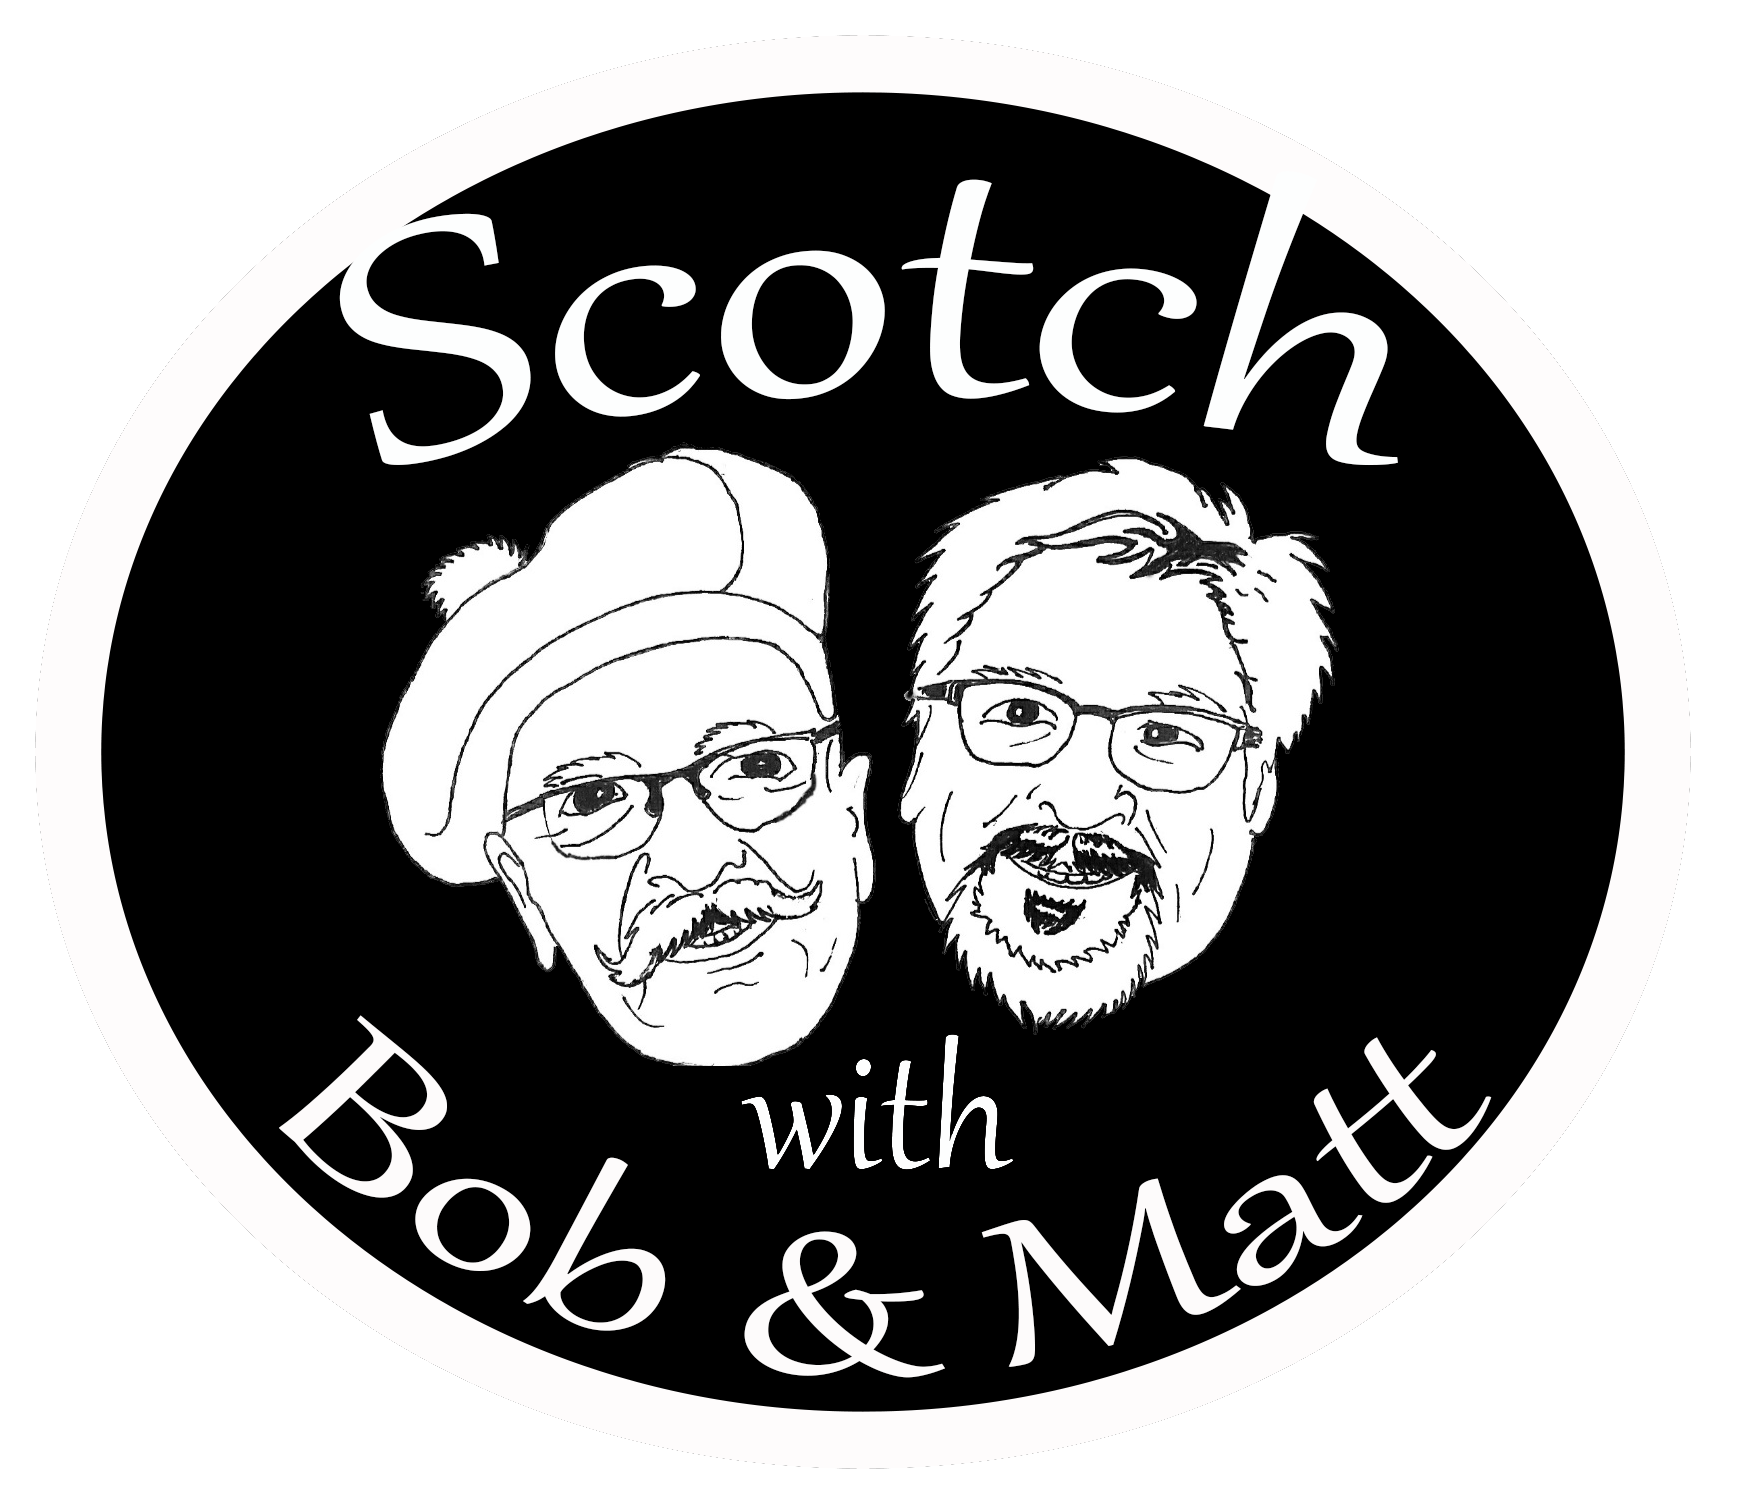 Scotch with Bob and Matt